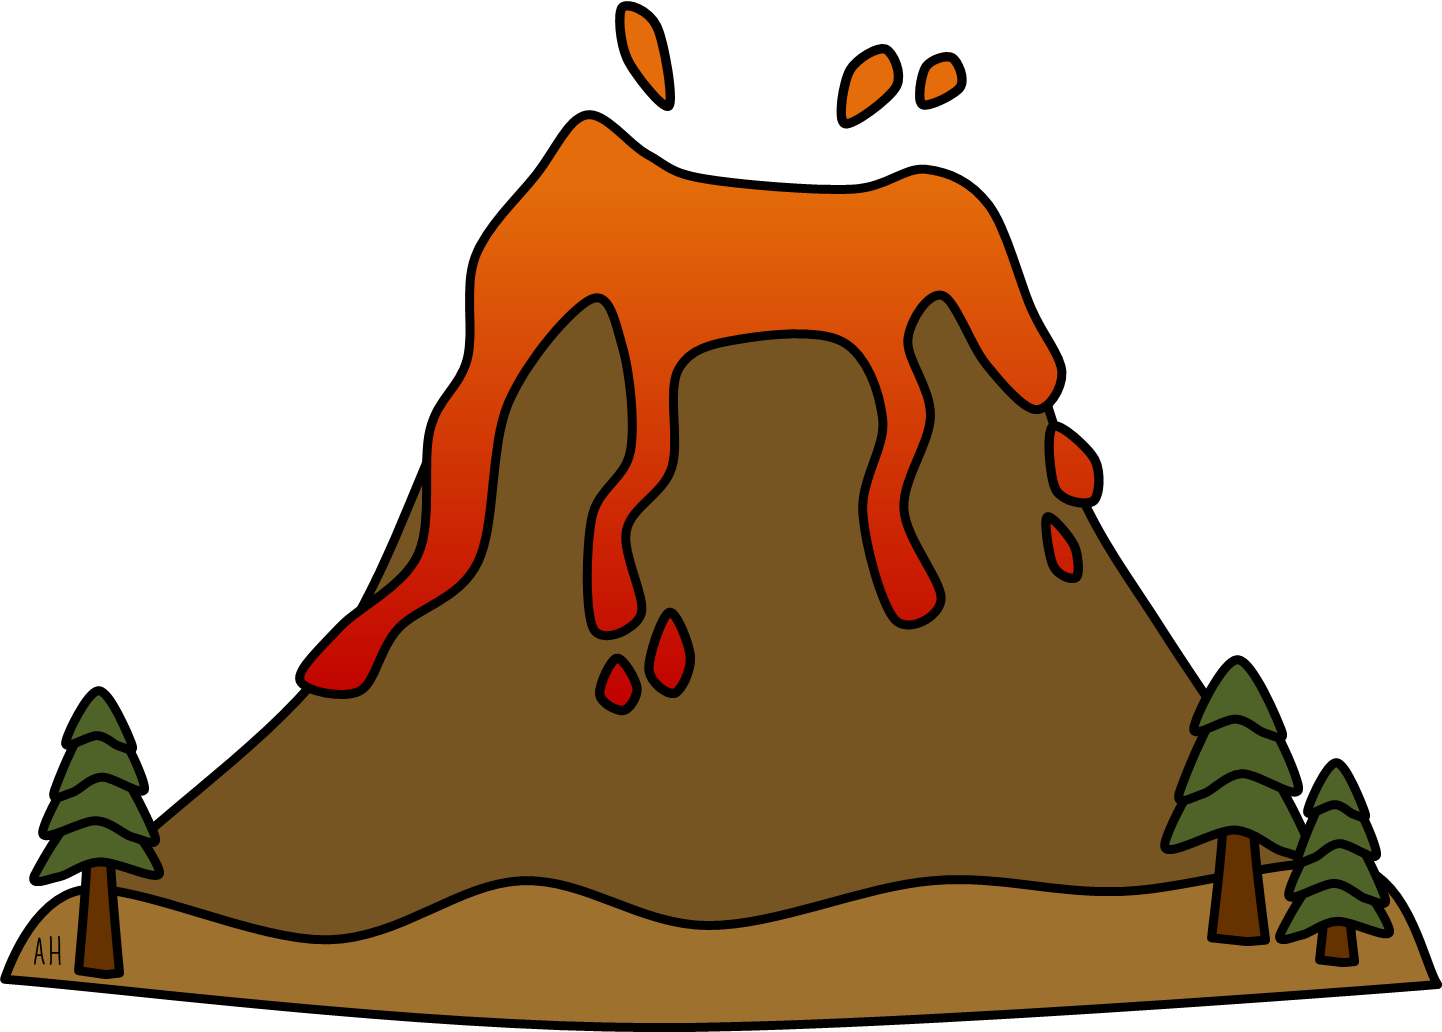 Erupting Volcano Cartoon Illustration PNG image